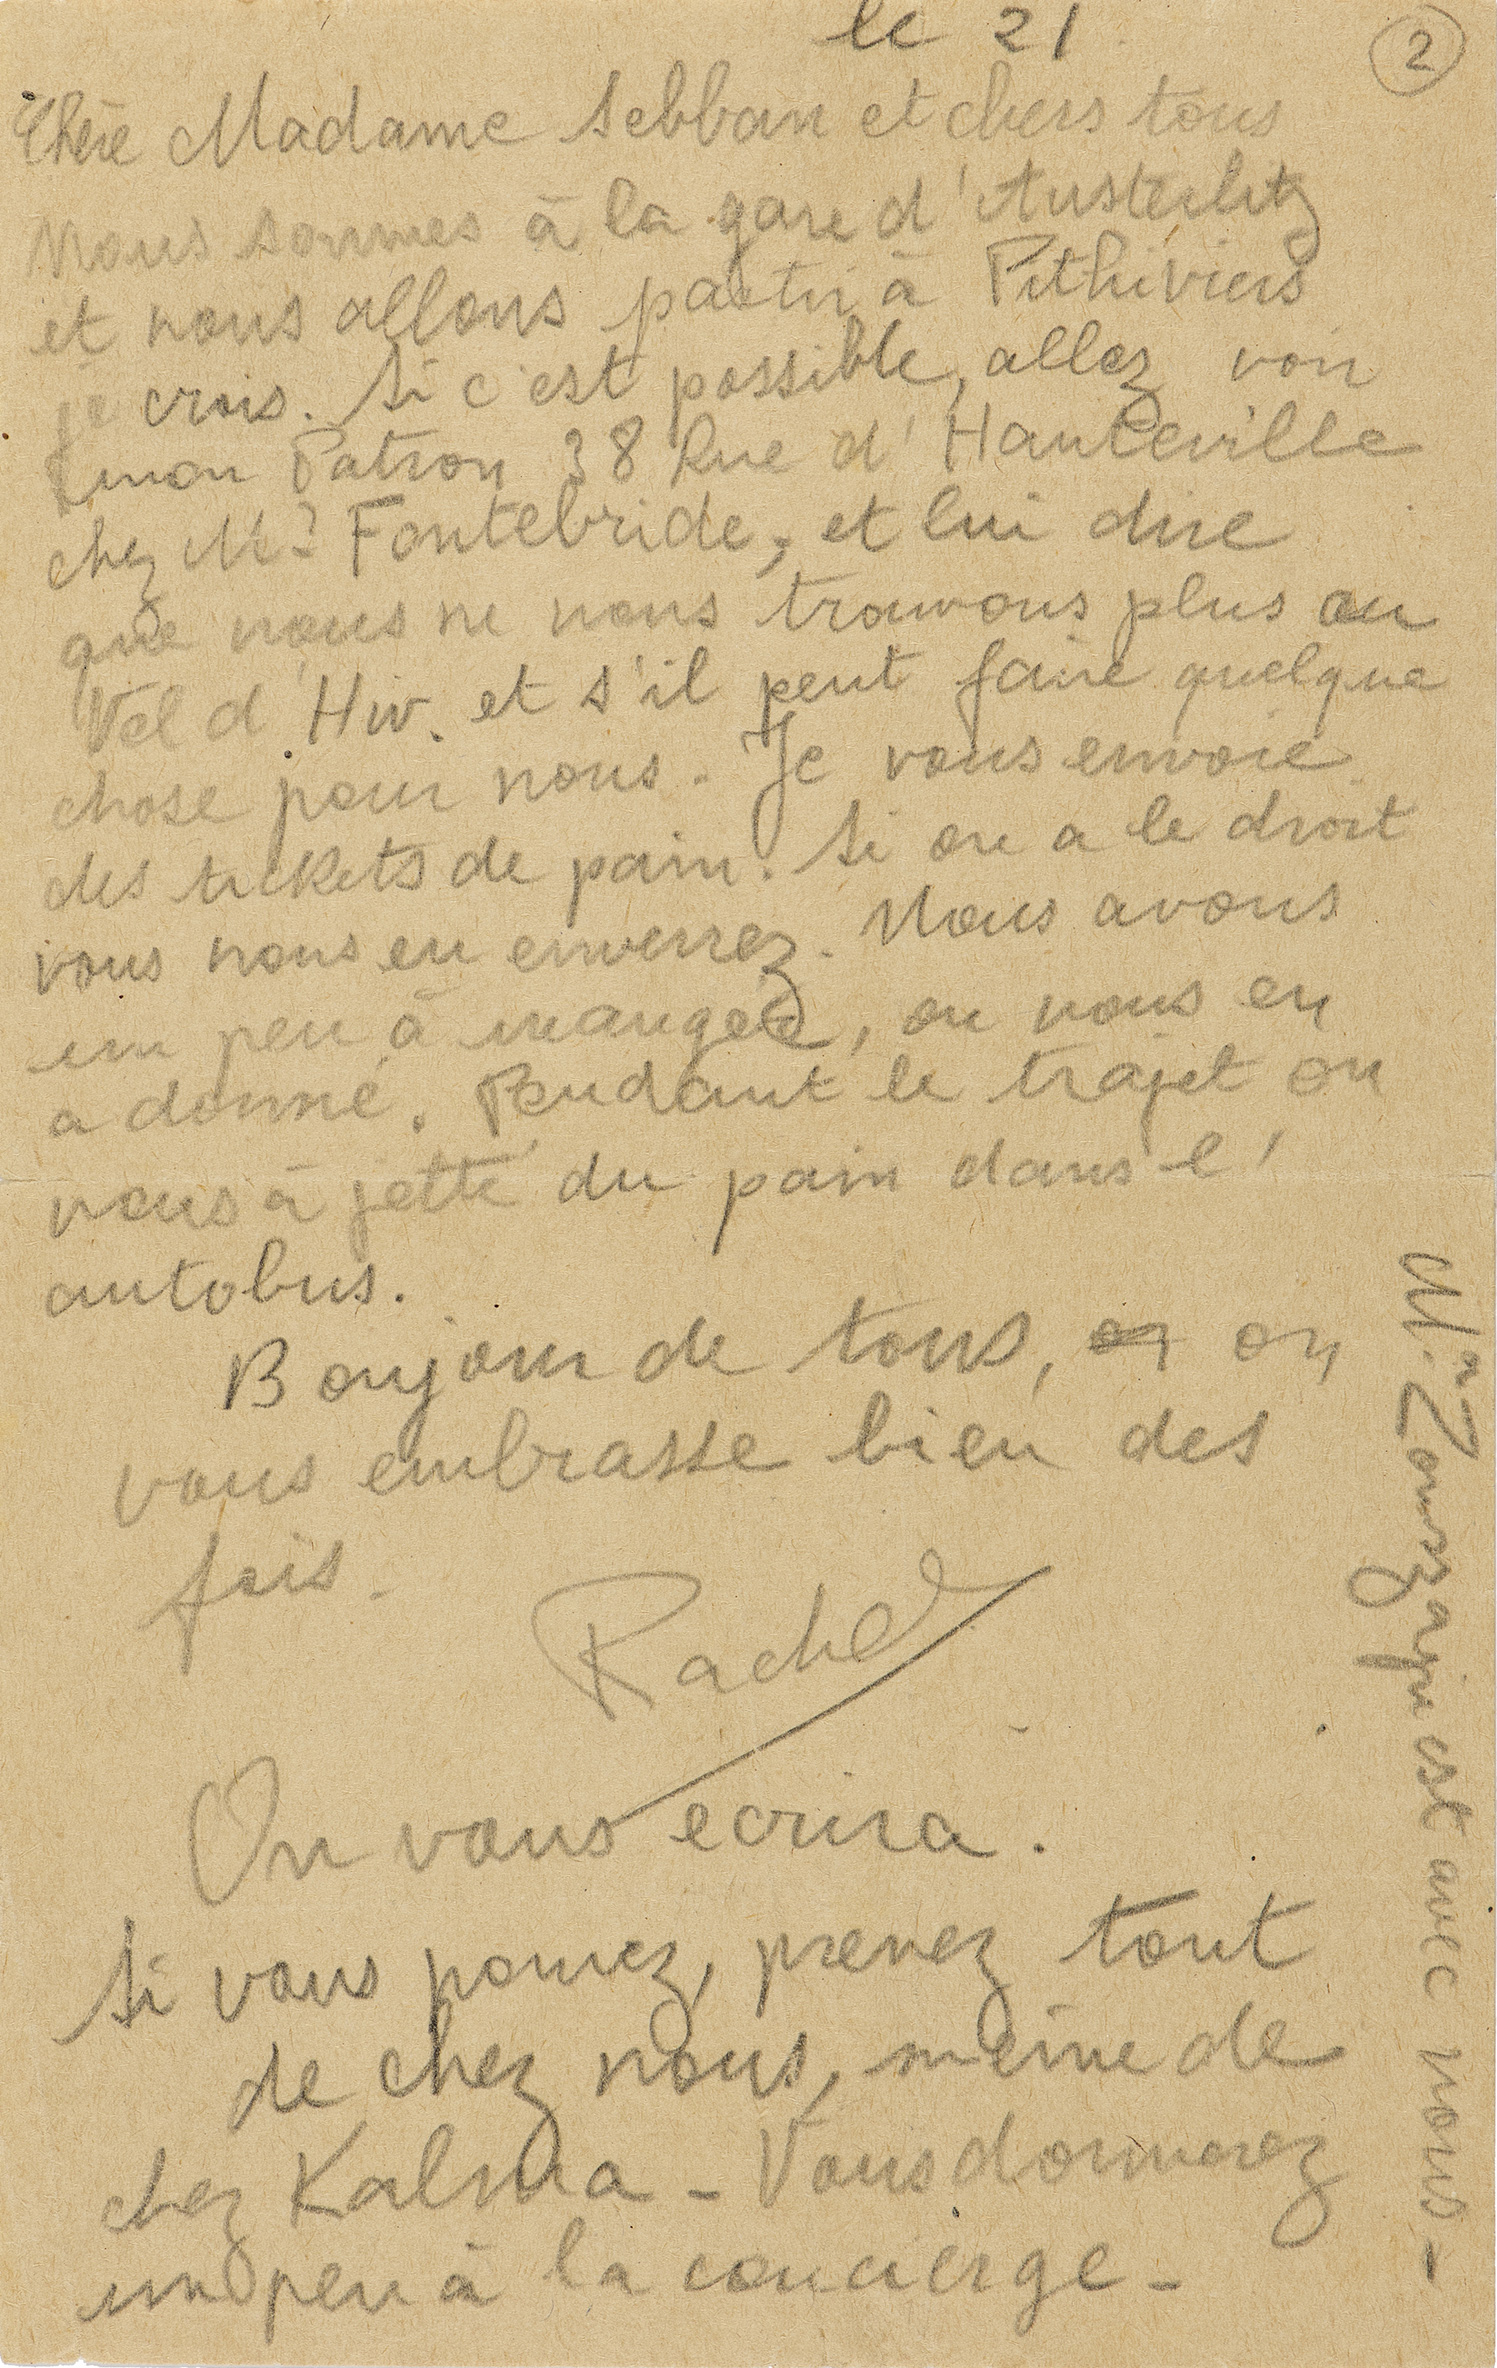 Letter from Rachel Polakiewicz: 17 July 1942, Austerlitz Train Station